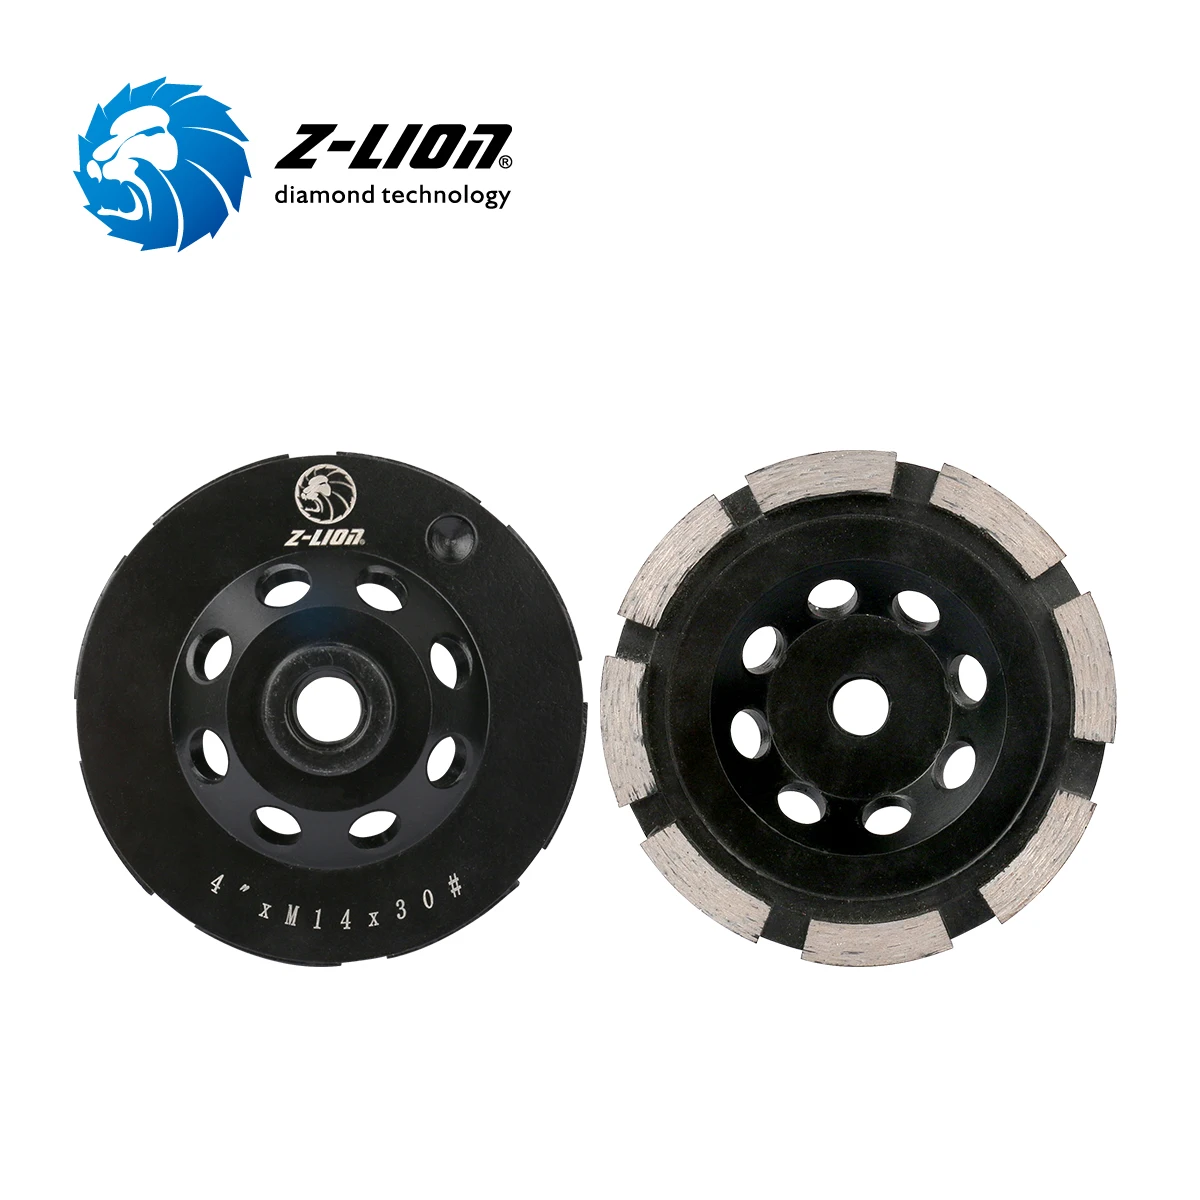 ZL-20 5" Diamond Cup Grinding Wheel for Concrete Floor